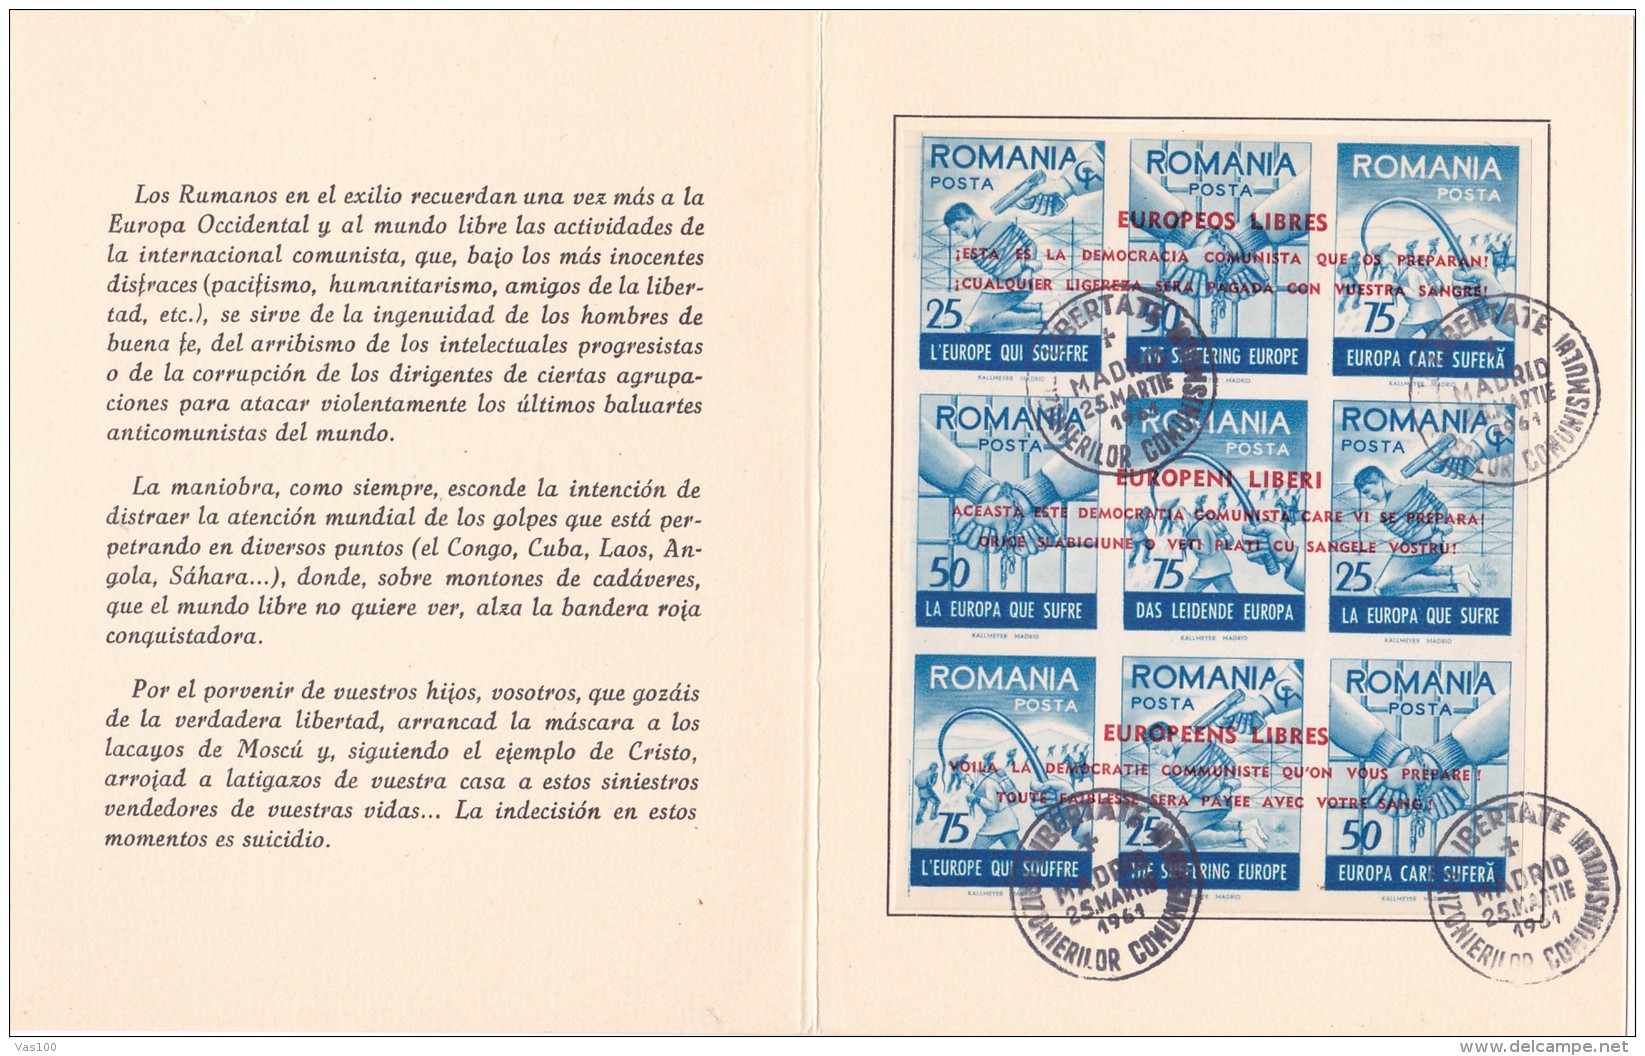 #T101      "PRO AMNISTIA" CONFERENCE, PARIS, FREEDOM AND JUSTICE ,   OVERPRINT , BOOKLETS,  1961  , SPAIN EXIL, ROMANIA. - Postzegelboekjes